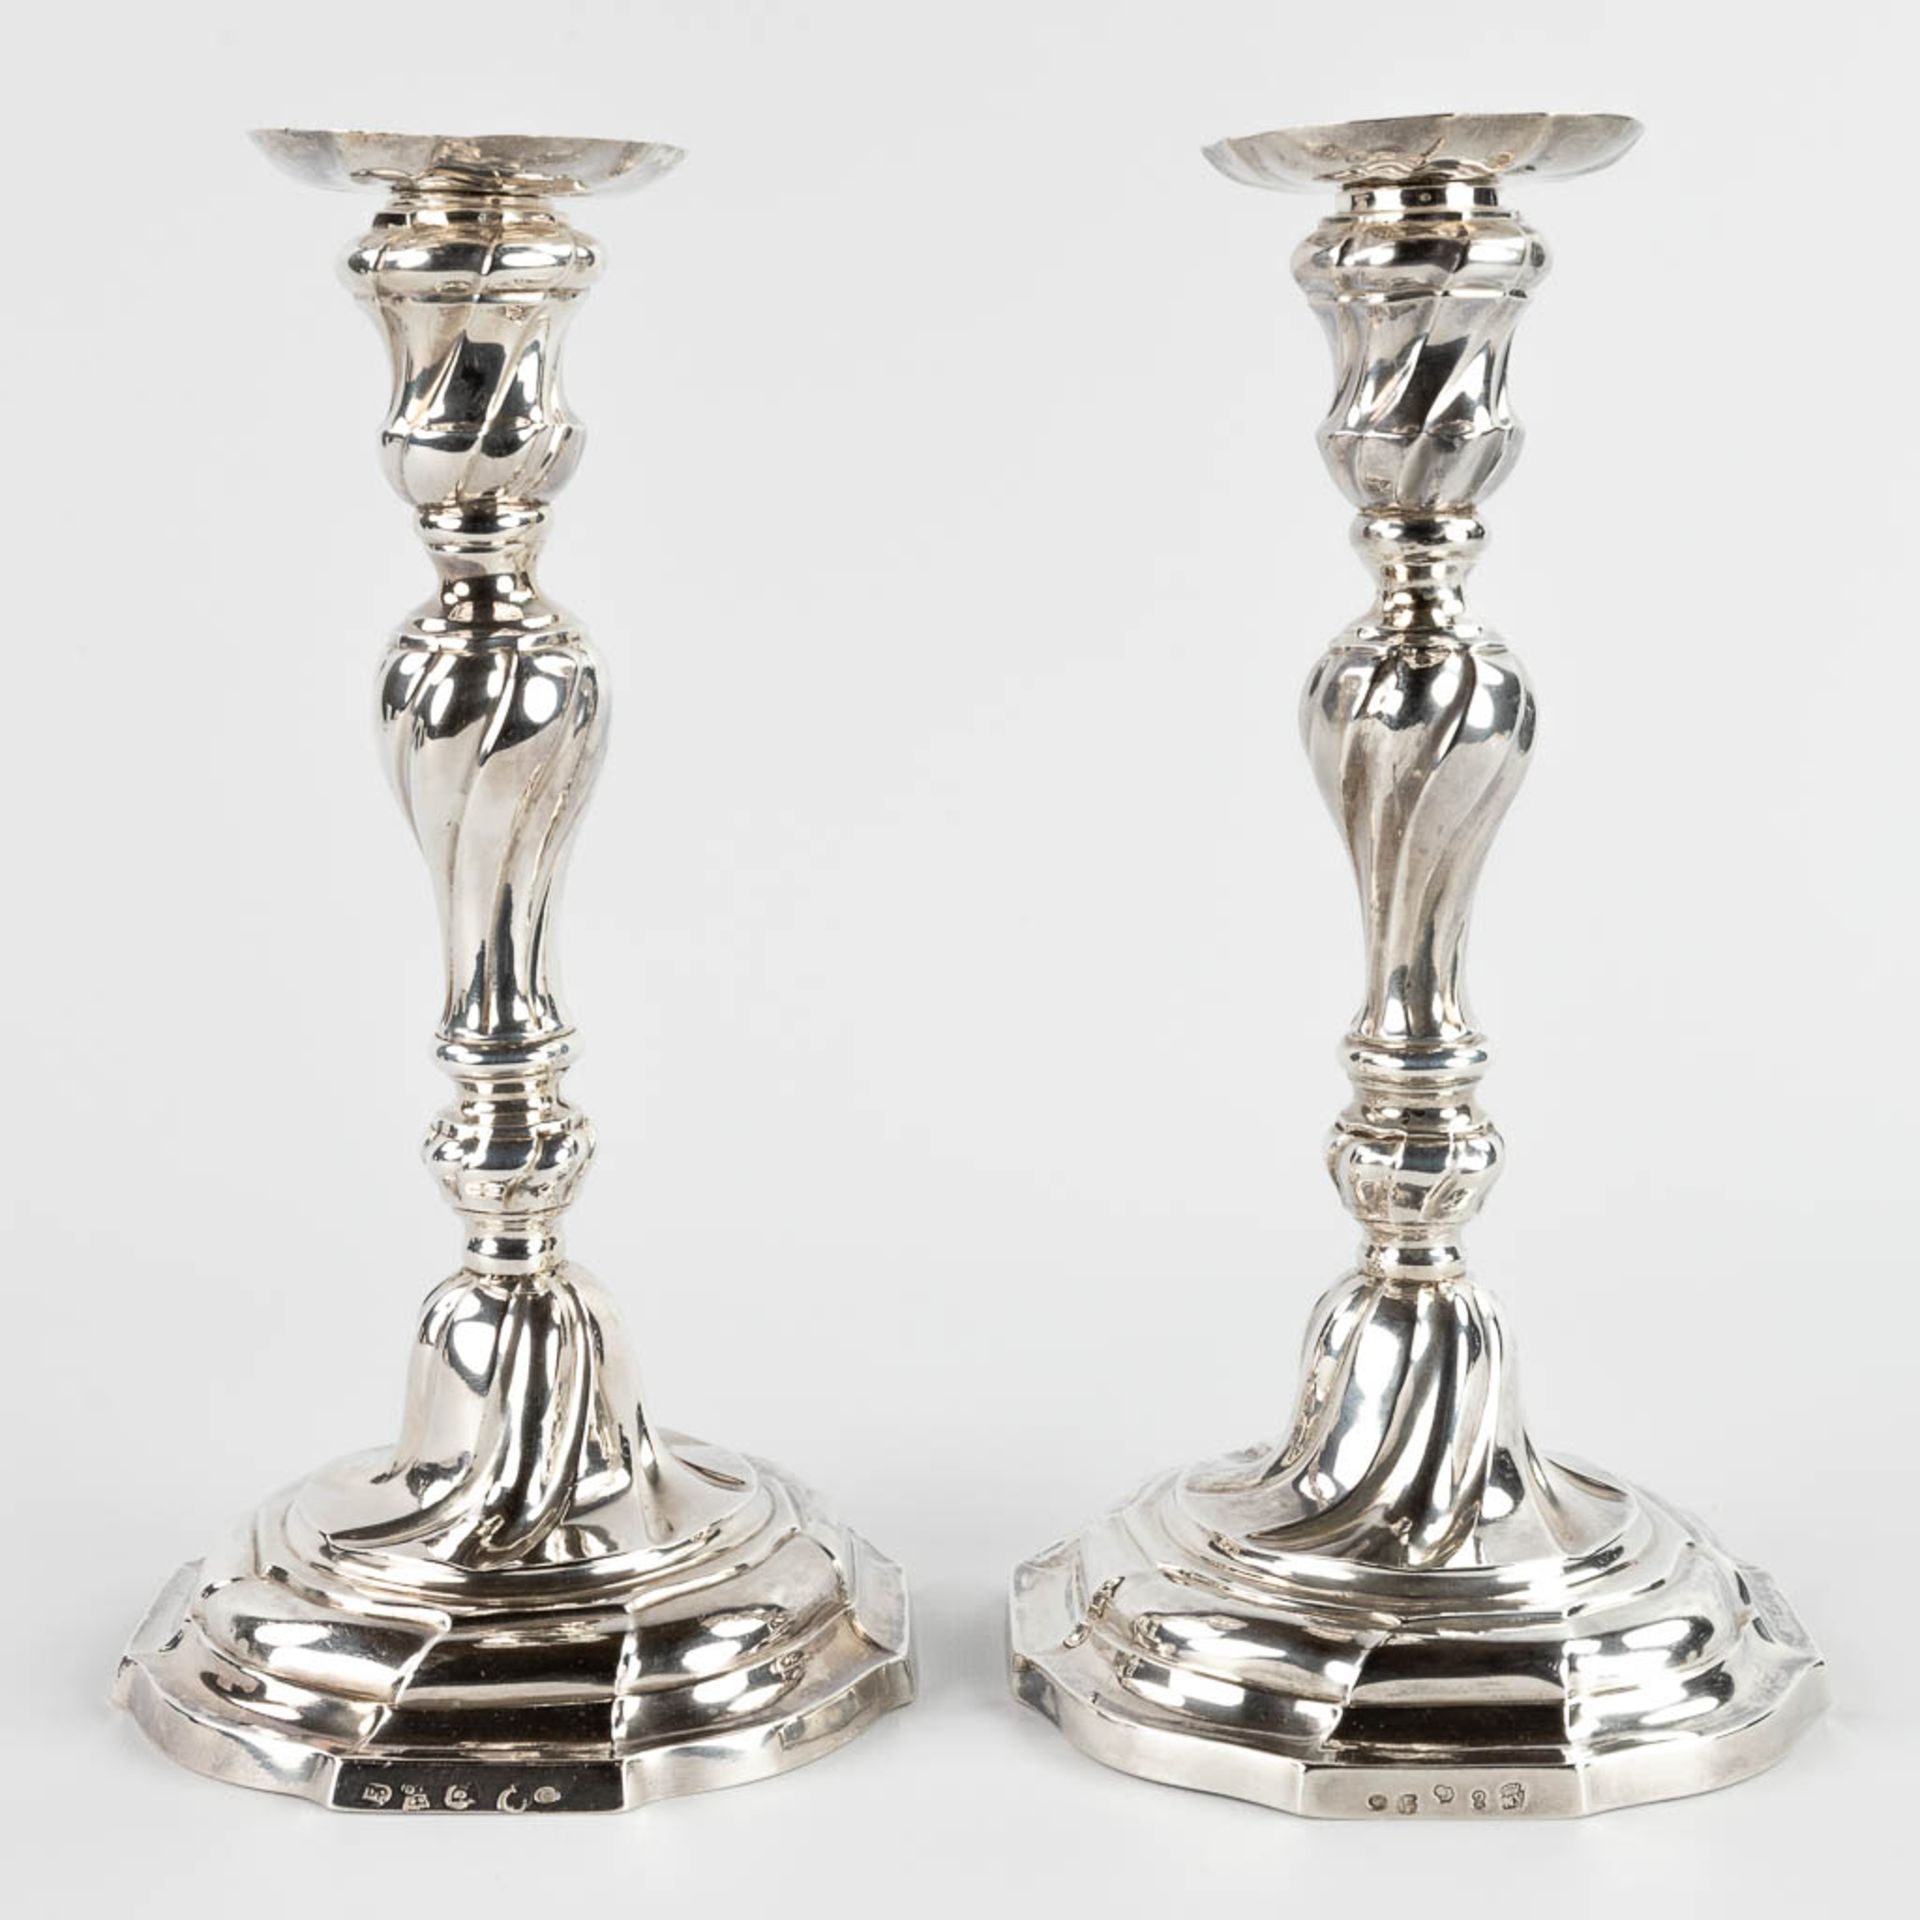 A pair of antique silver candlesticks, Ghent, 1777. Marked N.J. Viene (Viette?). Belgium, 18th C. 61